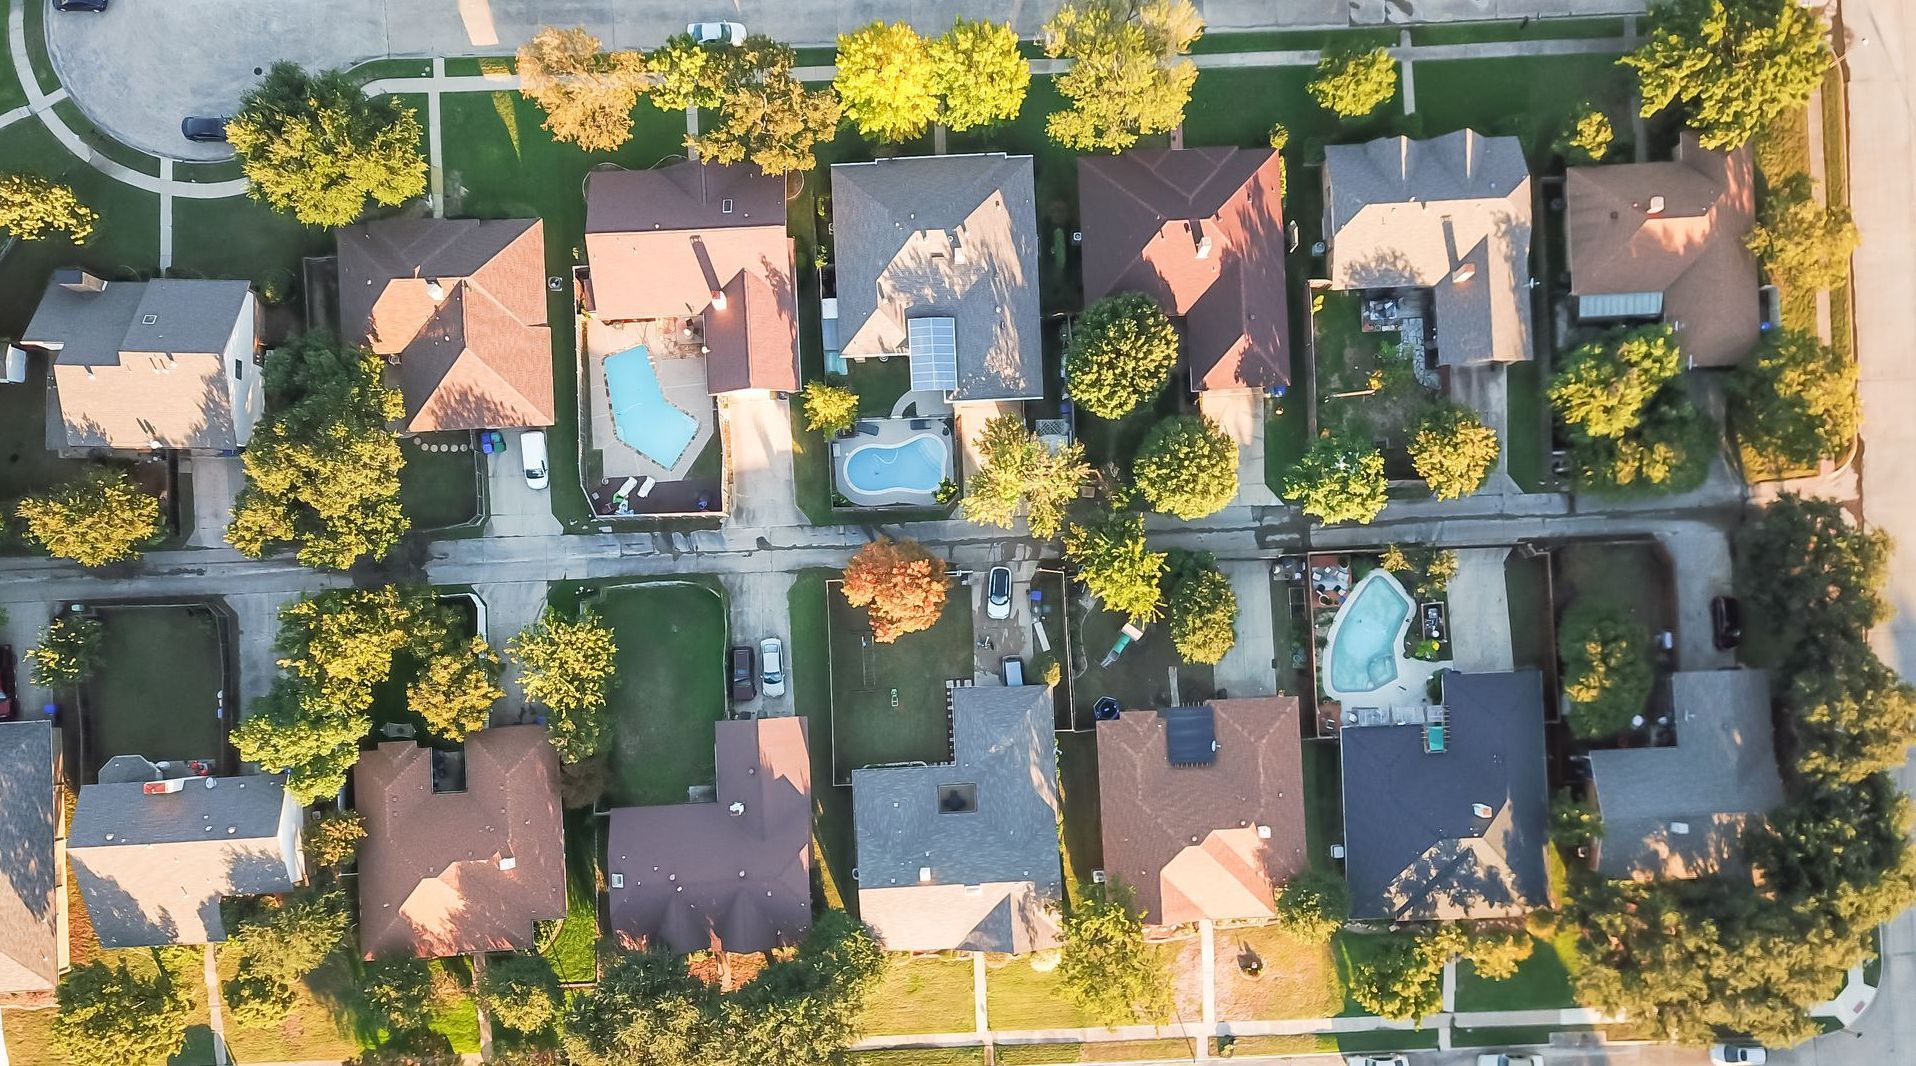 Overhead image of a neighborhood with shingle roofs